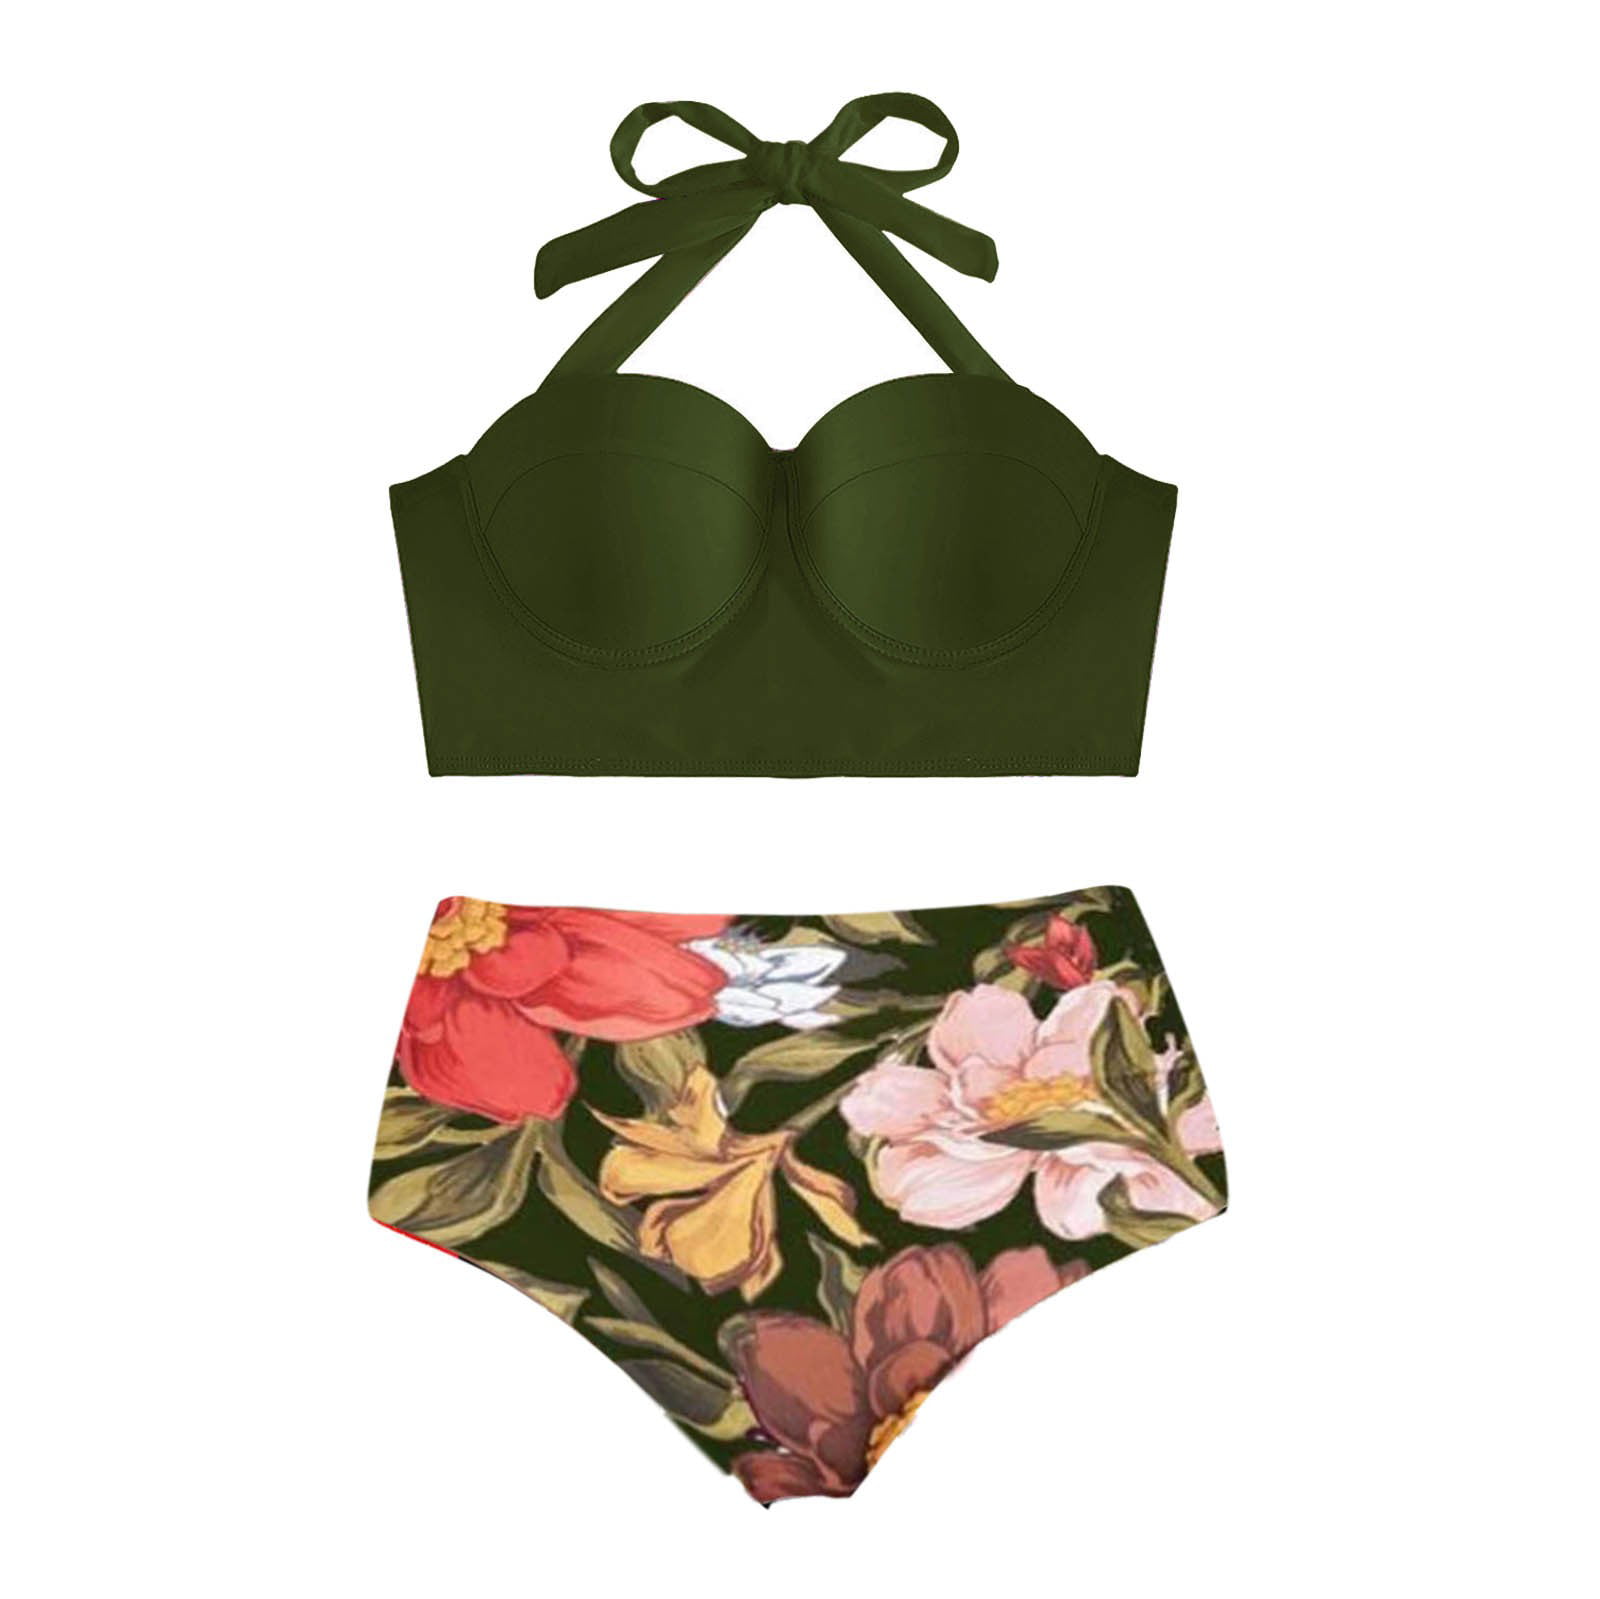 Ociviesr Women's 2 Piece Bathing Suits Halter Ring Bikini Set With ...